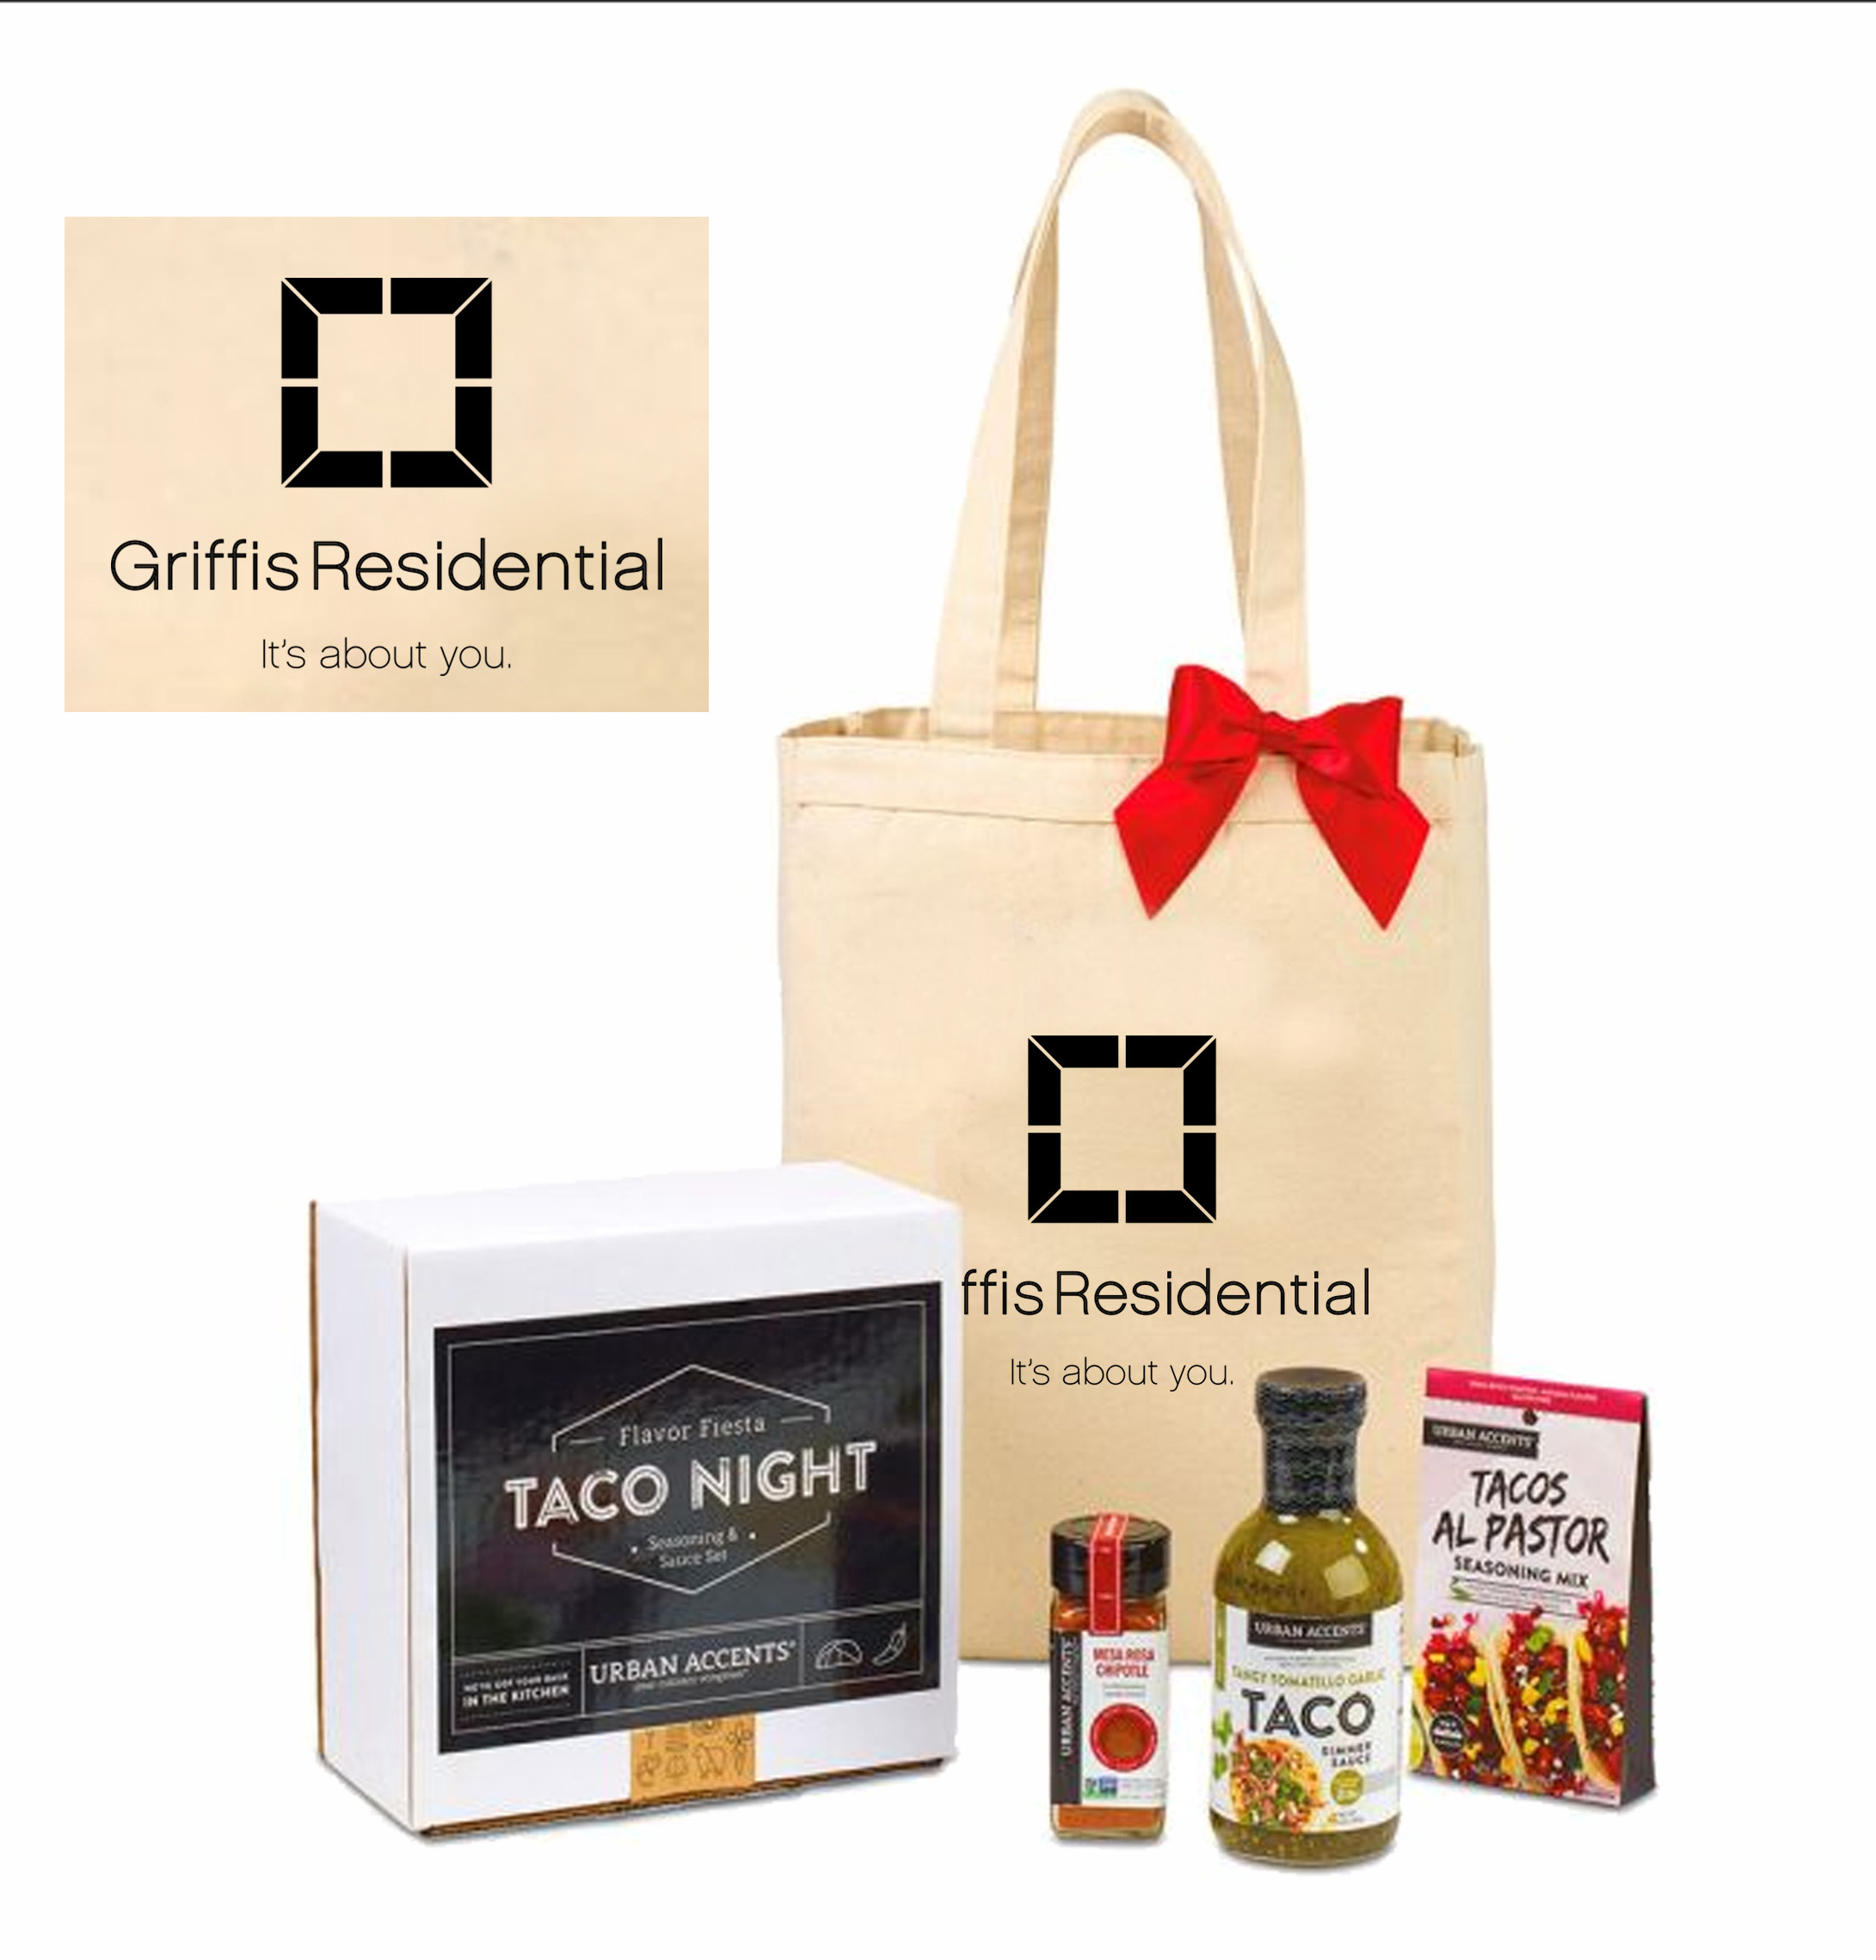 Griffis Residential Taco Kit